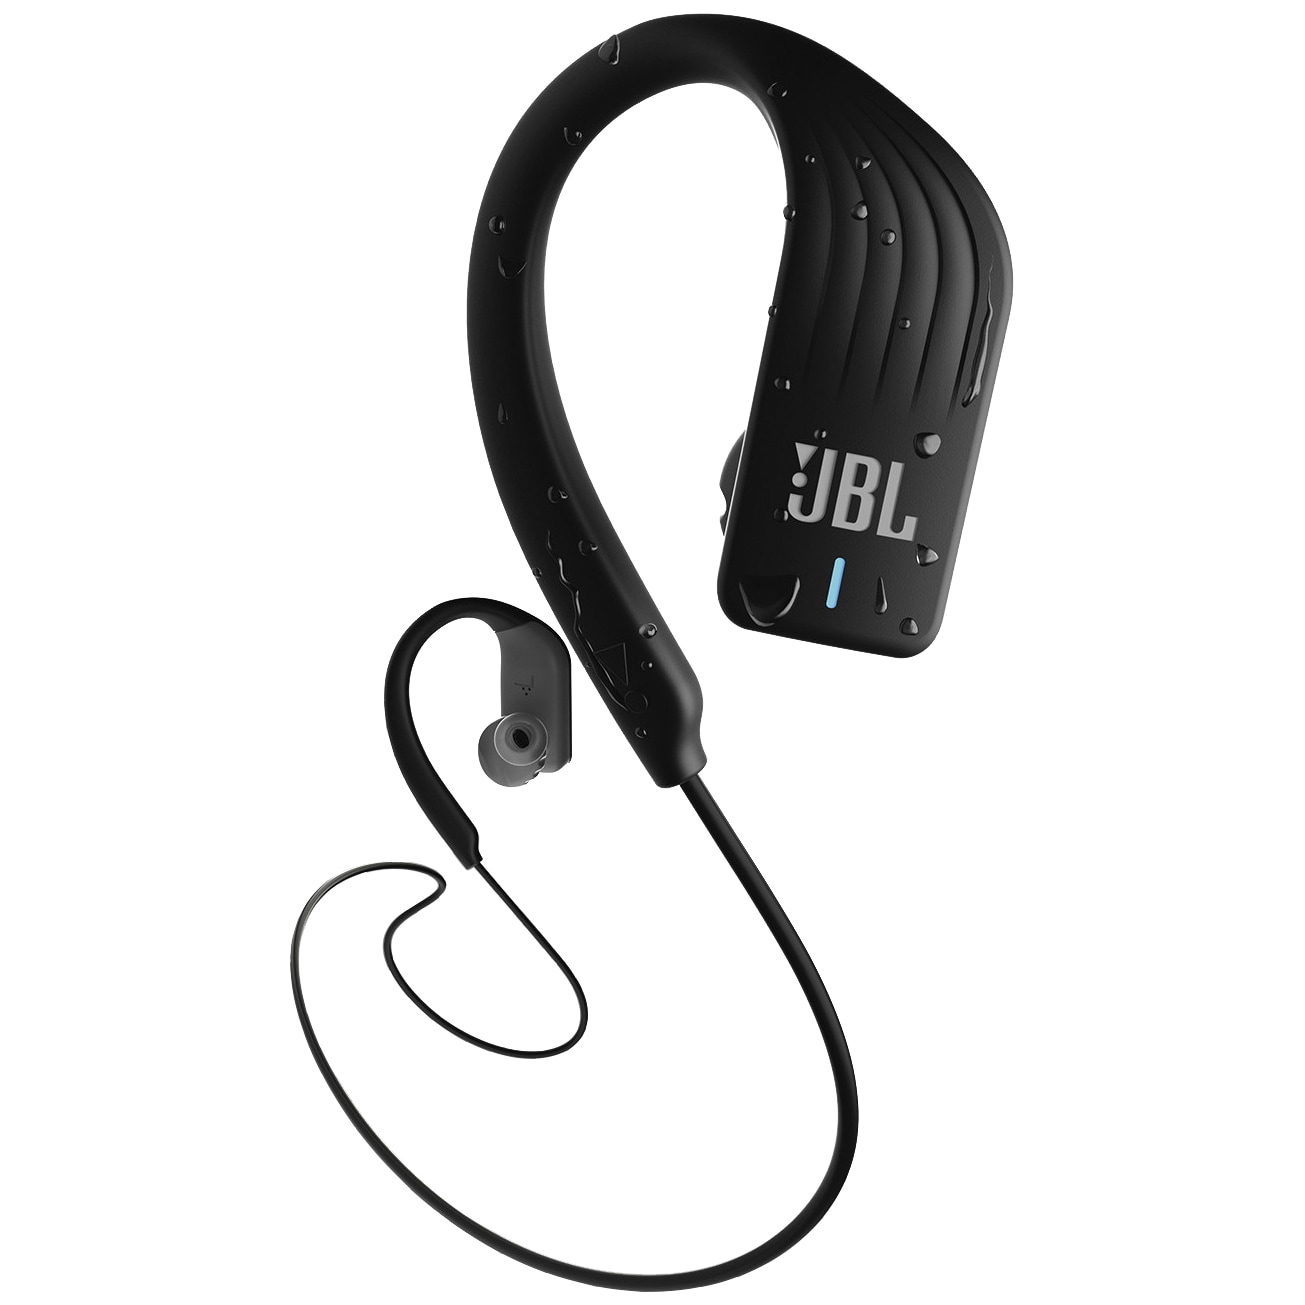 JBL Endurance Sprint trådlösa in-ear hörlurar (svart) - Hörlurar -  Elgiganten